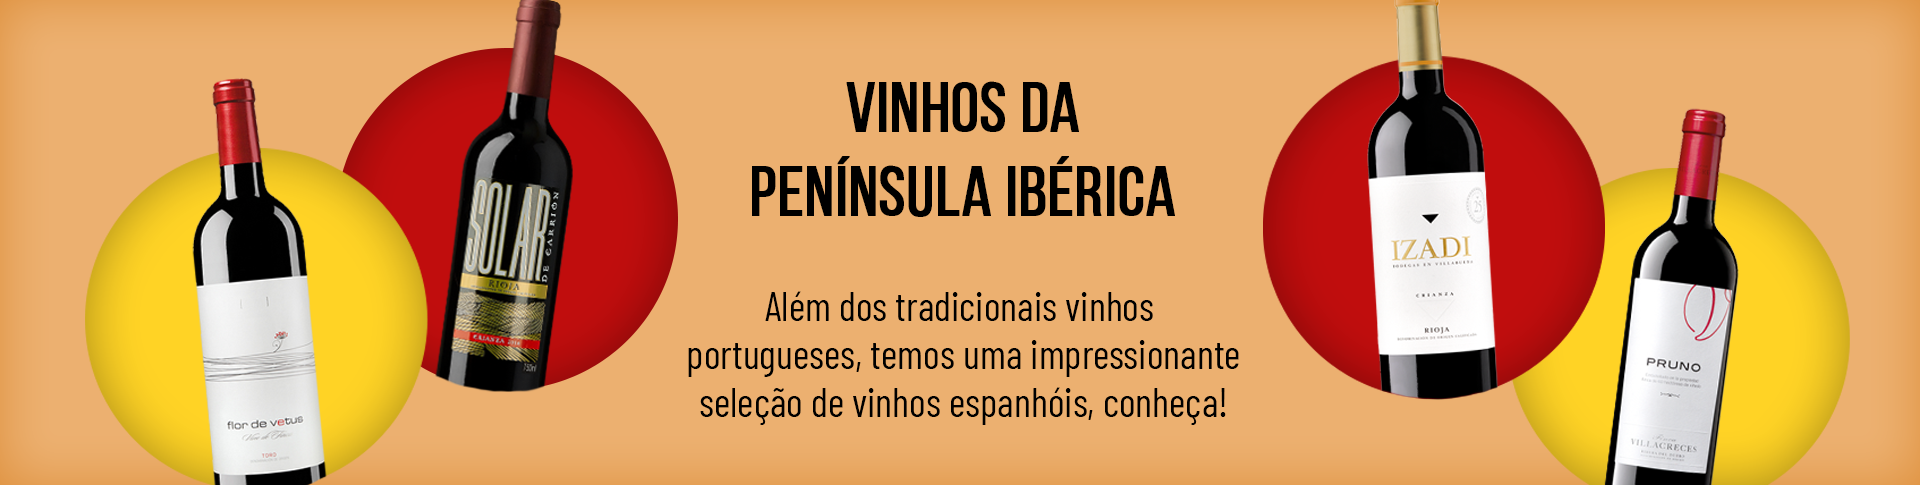 Península Ibérica - 1920x485